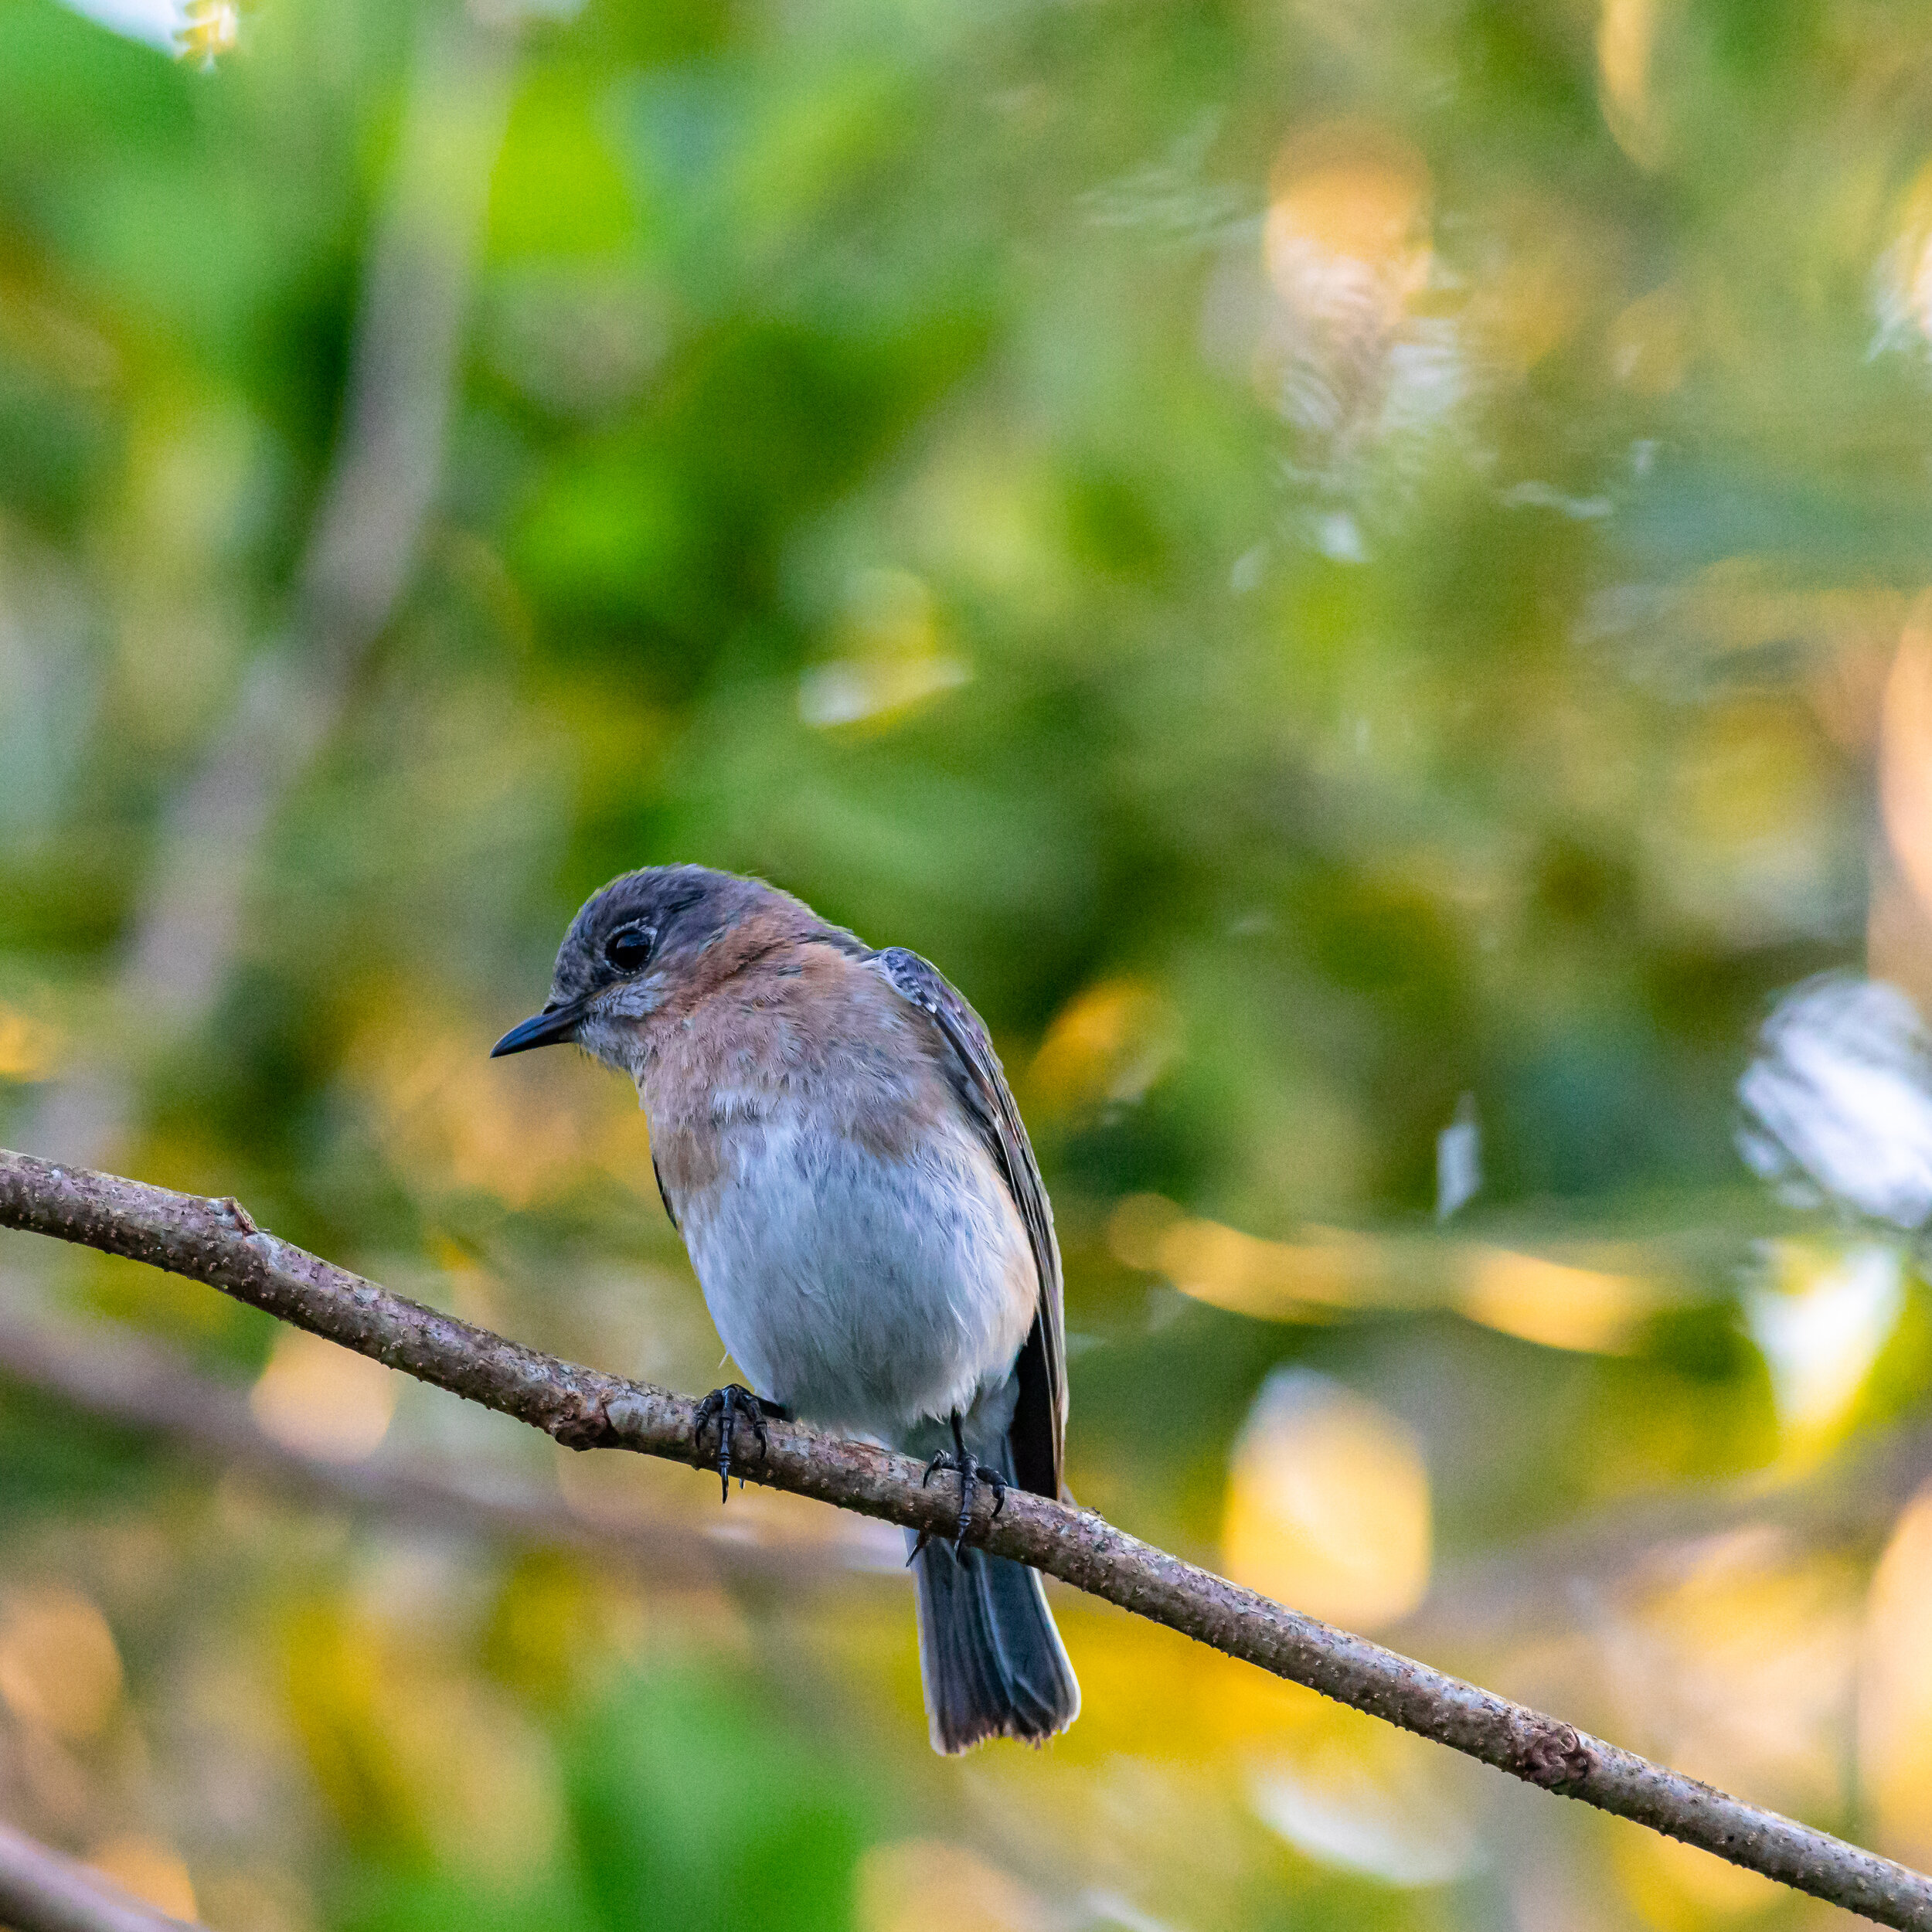 Female, Eastern Bluebird